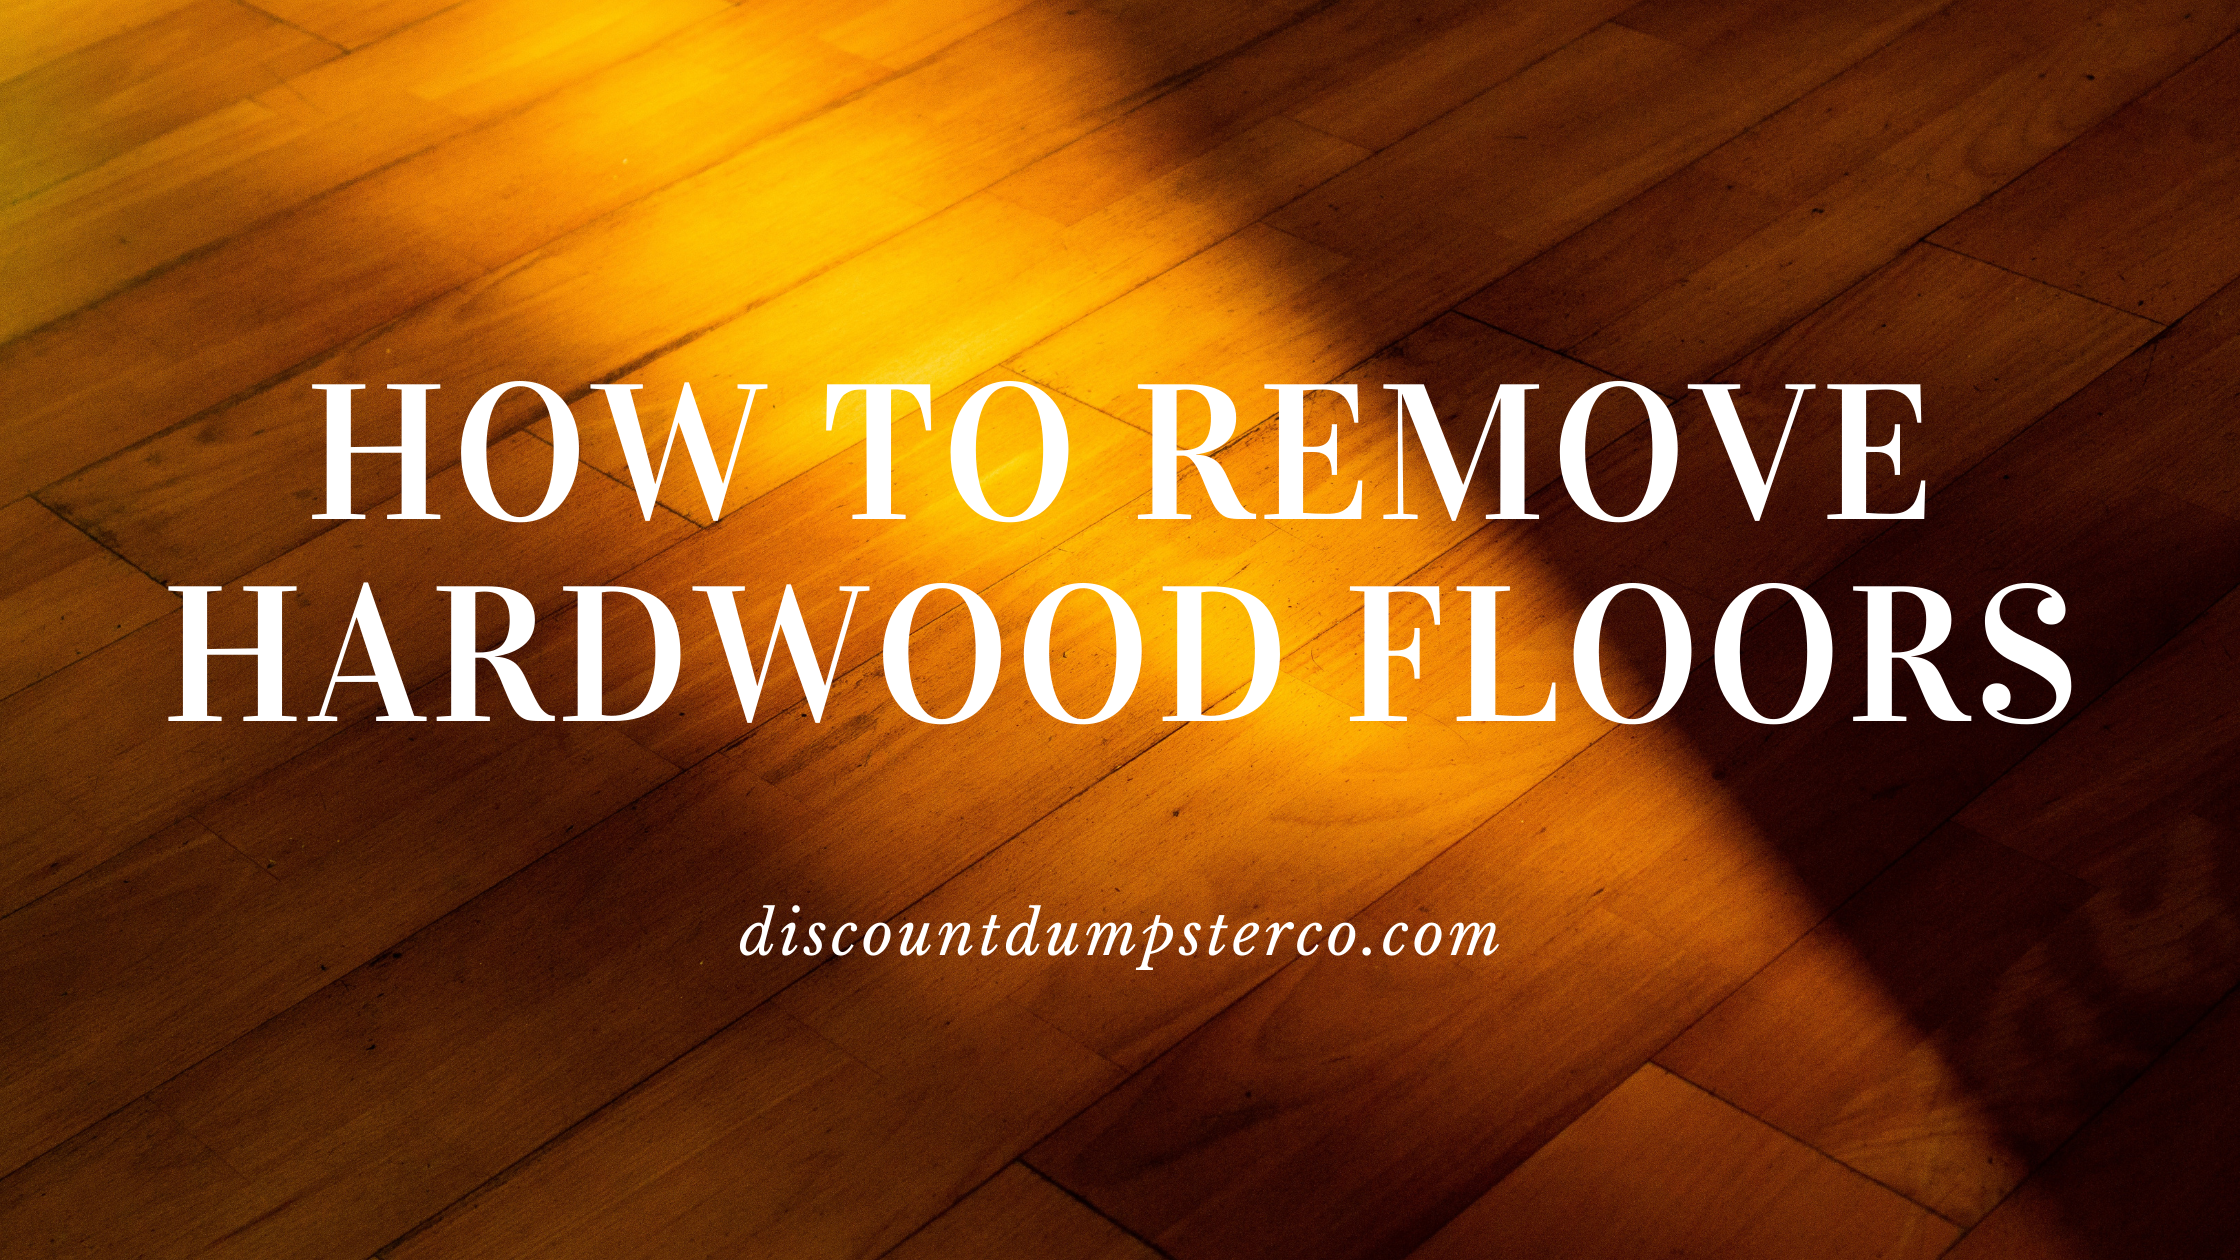 How To Remove Hardwood Floors, Hardwood Floor Board Puller